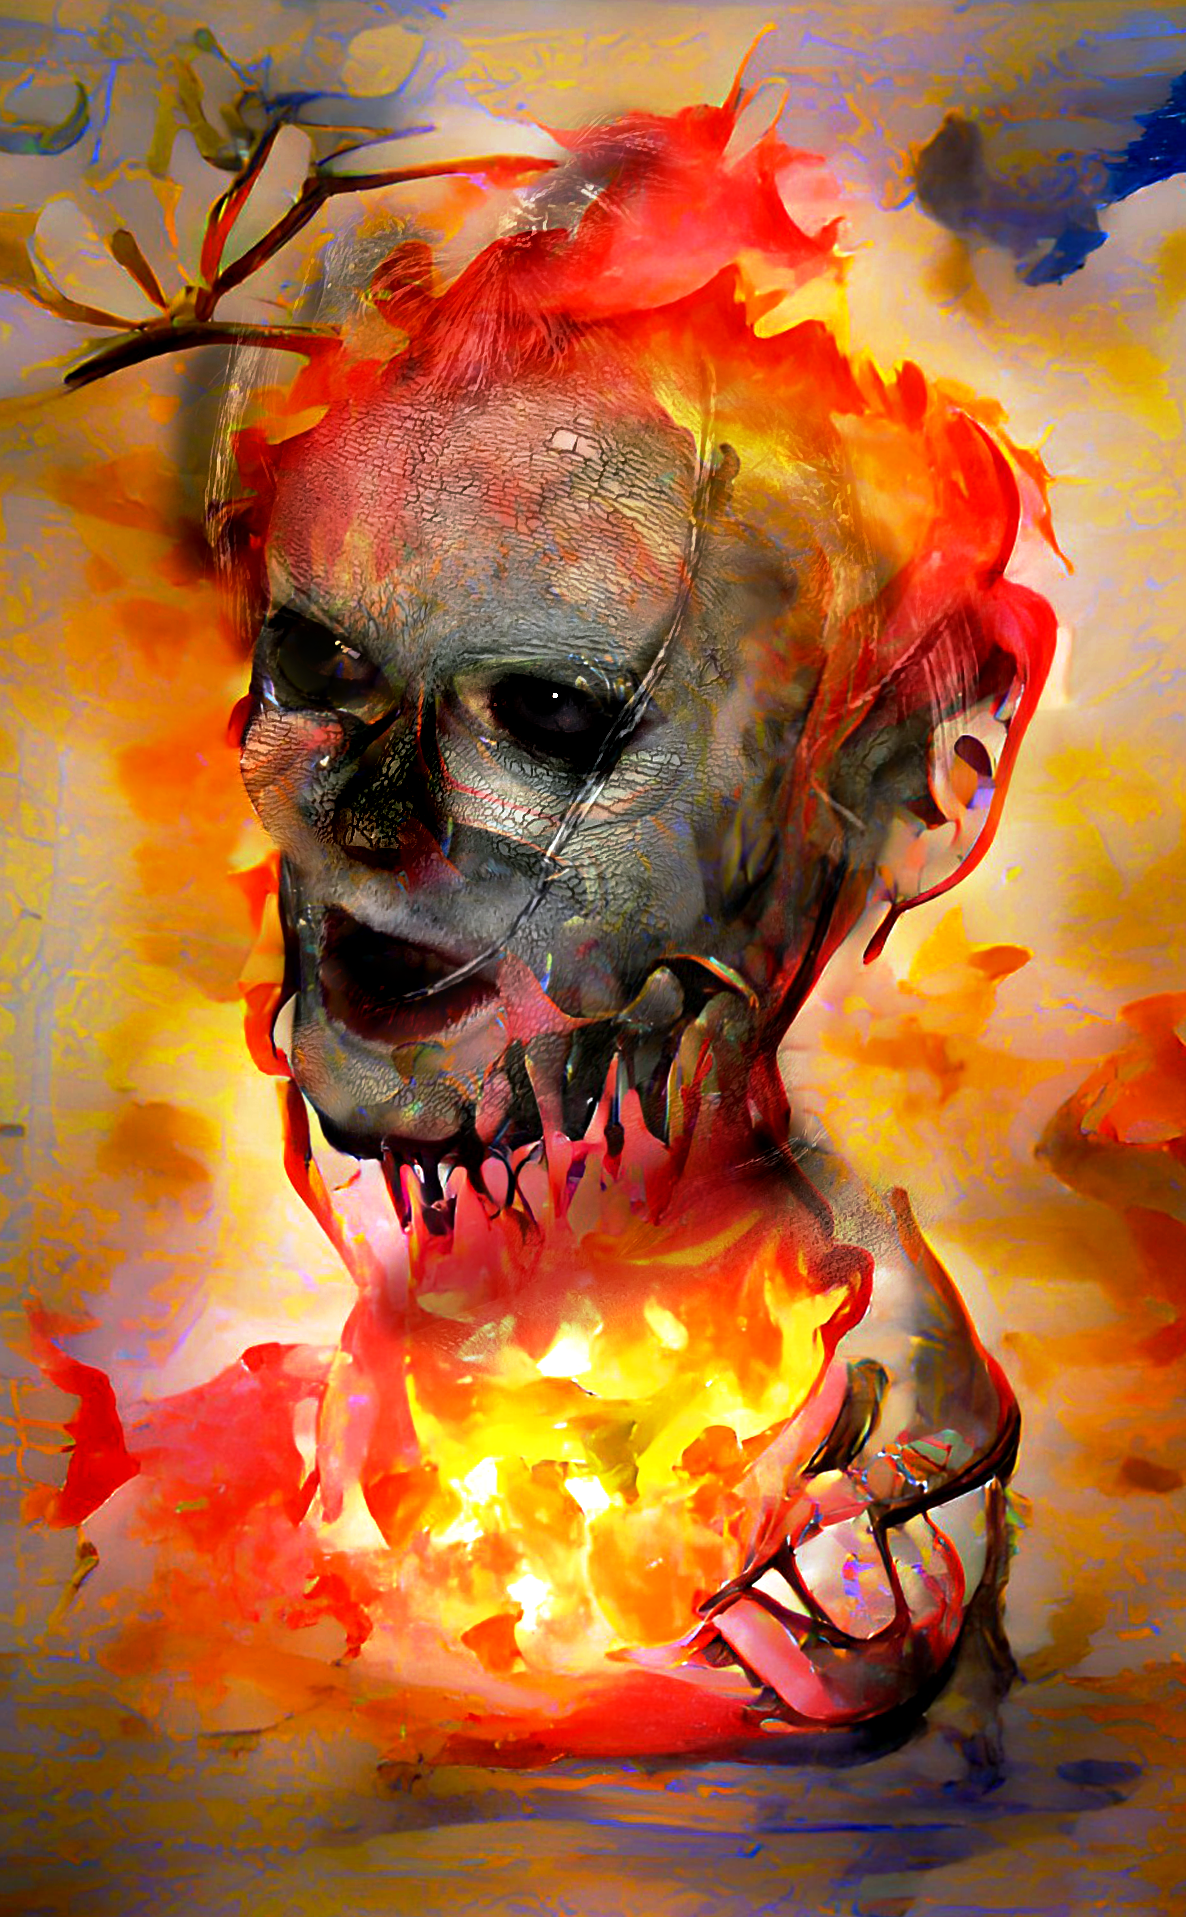 Burning Zombie Head